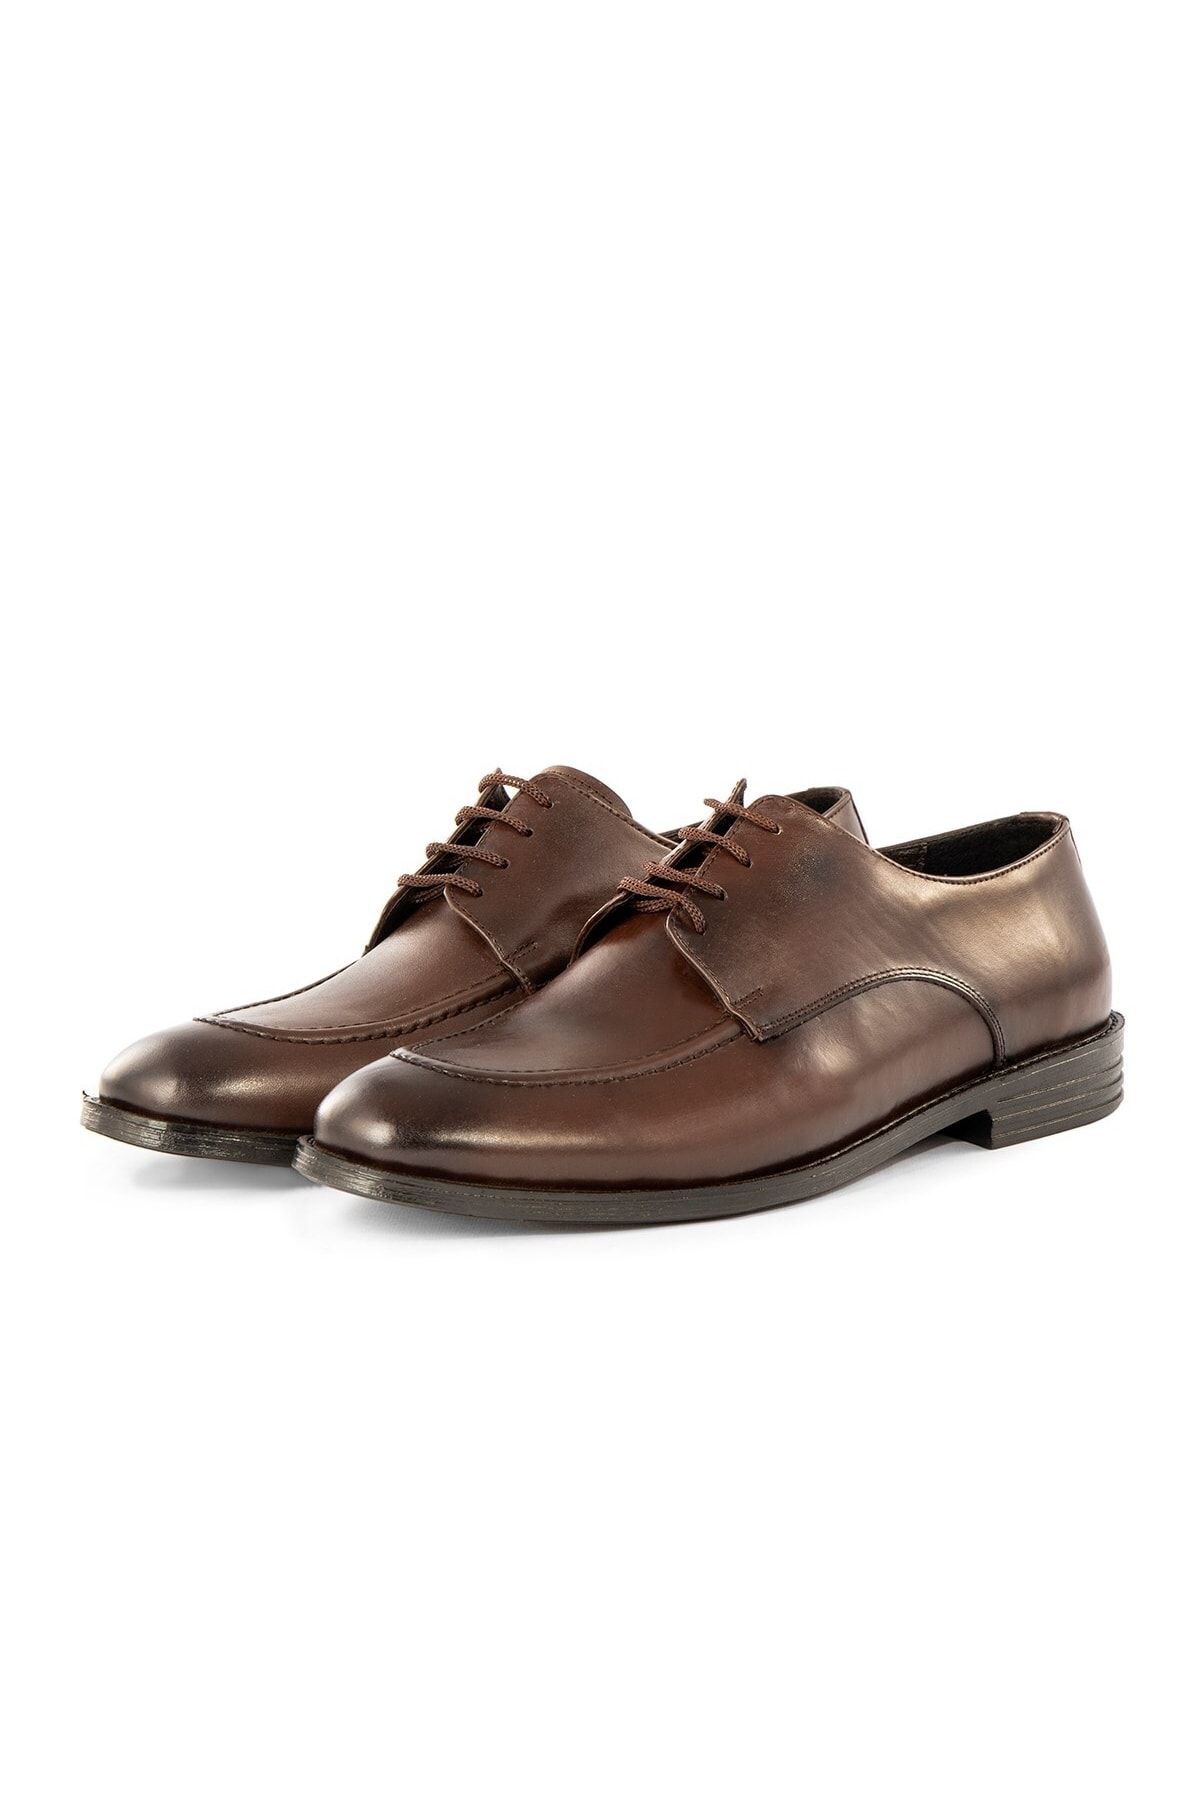 Ducavelli Tira Hakiki Deri Erkek Klasik Ayakkabı, Derby Klasik Ayakkabı, Bağcıklı Klasik Ayakkabı